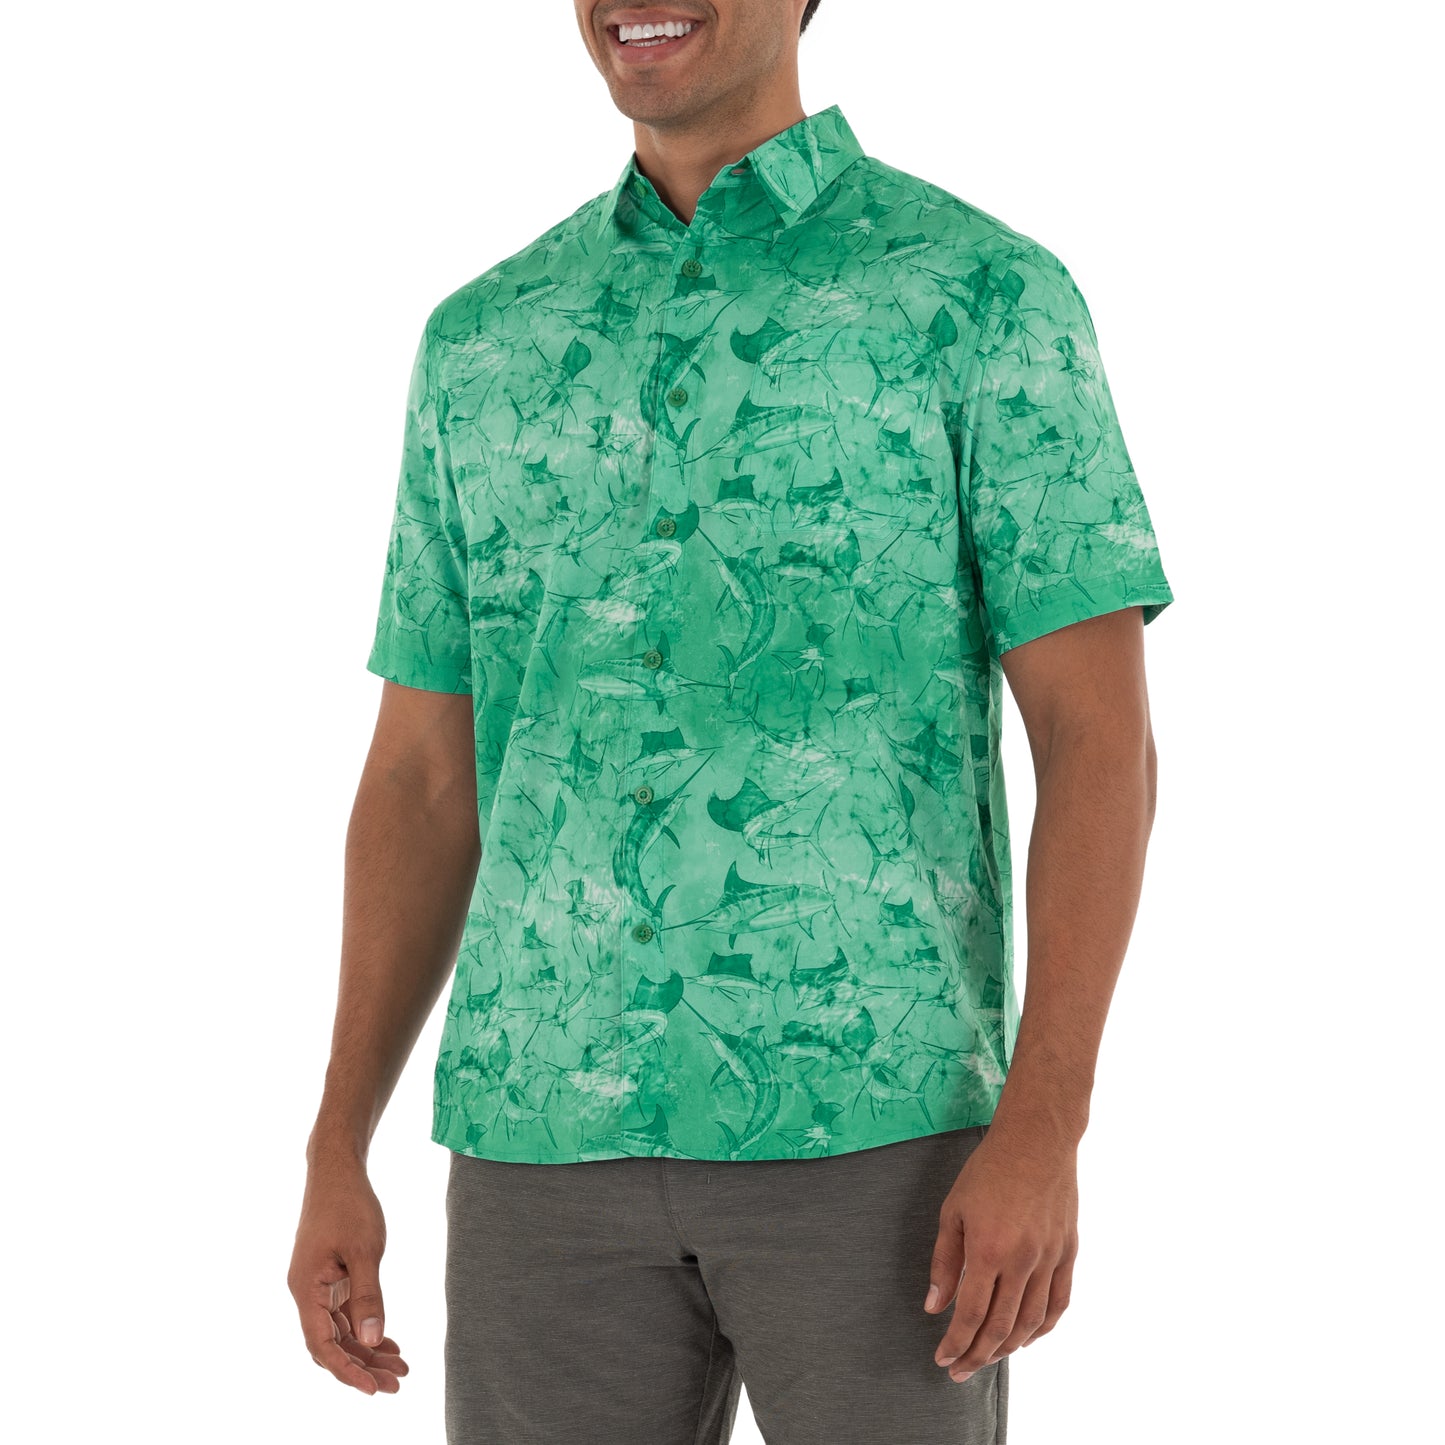 Men's Short Sleeve Printed Turquoise Fishing Shirt